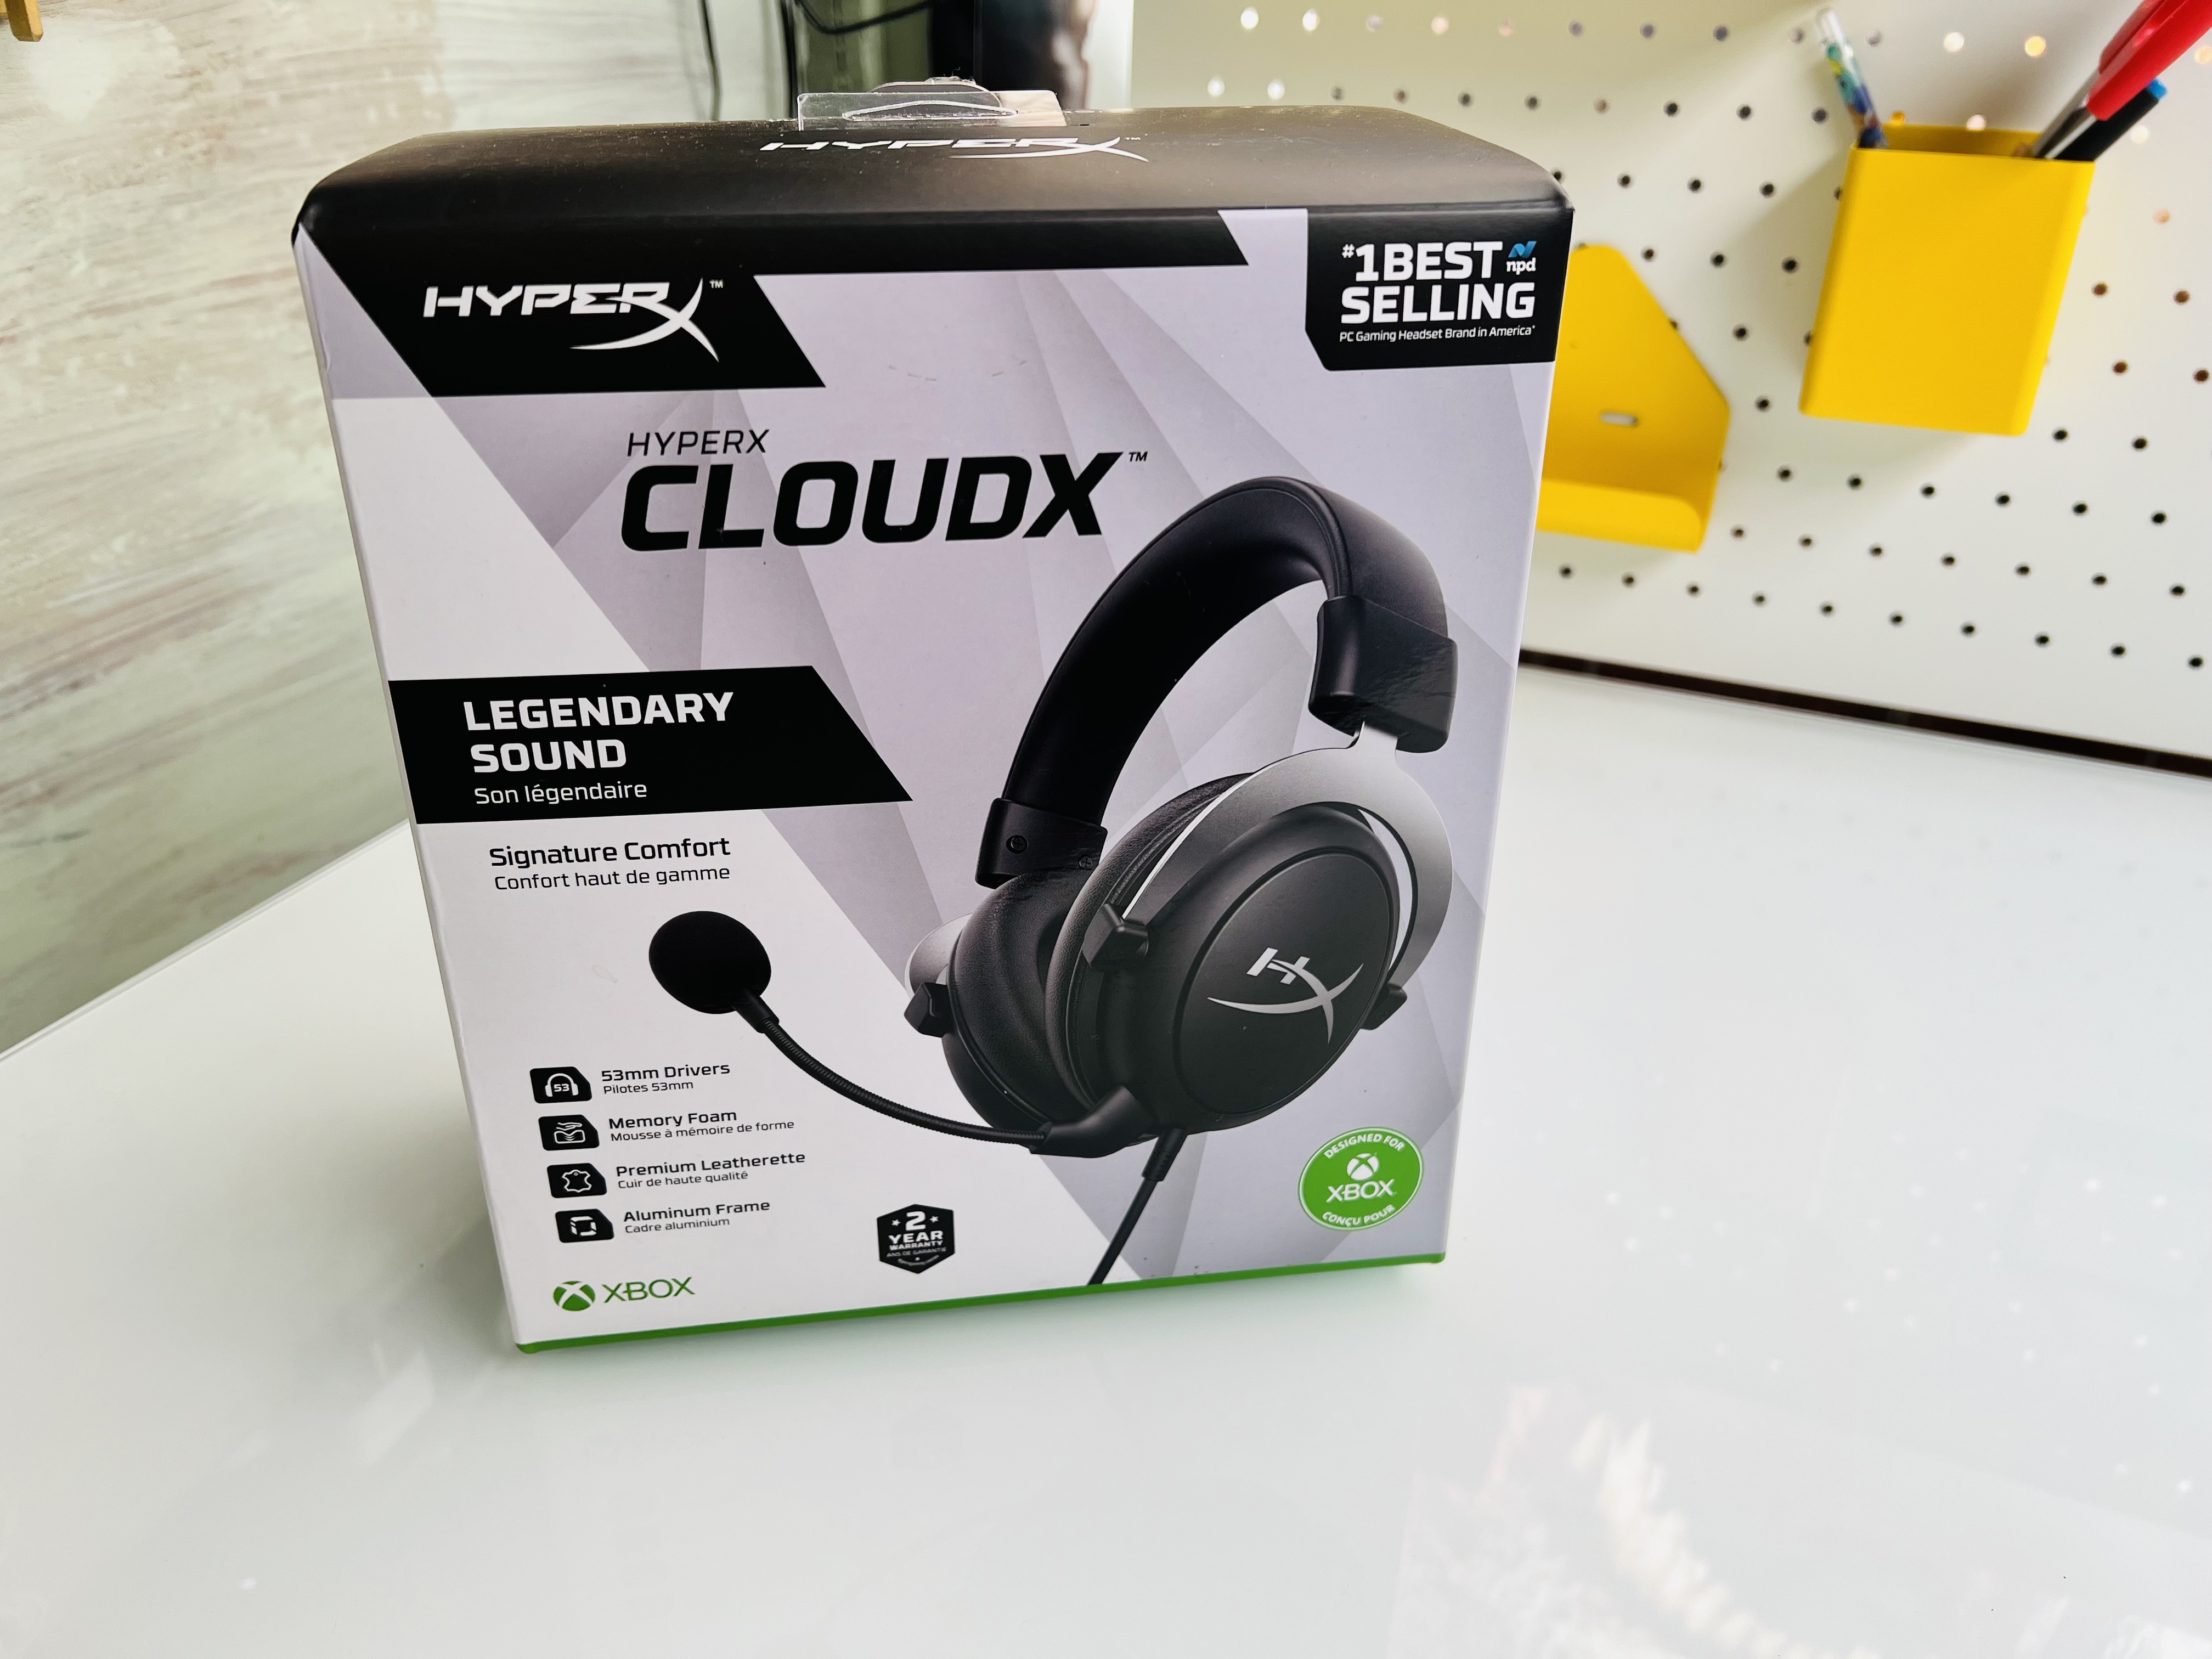 HyperX CloudX outer box